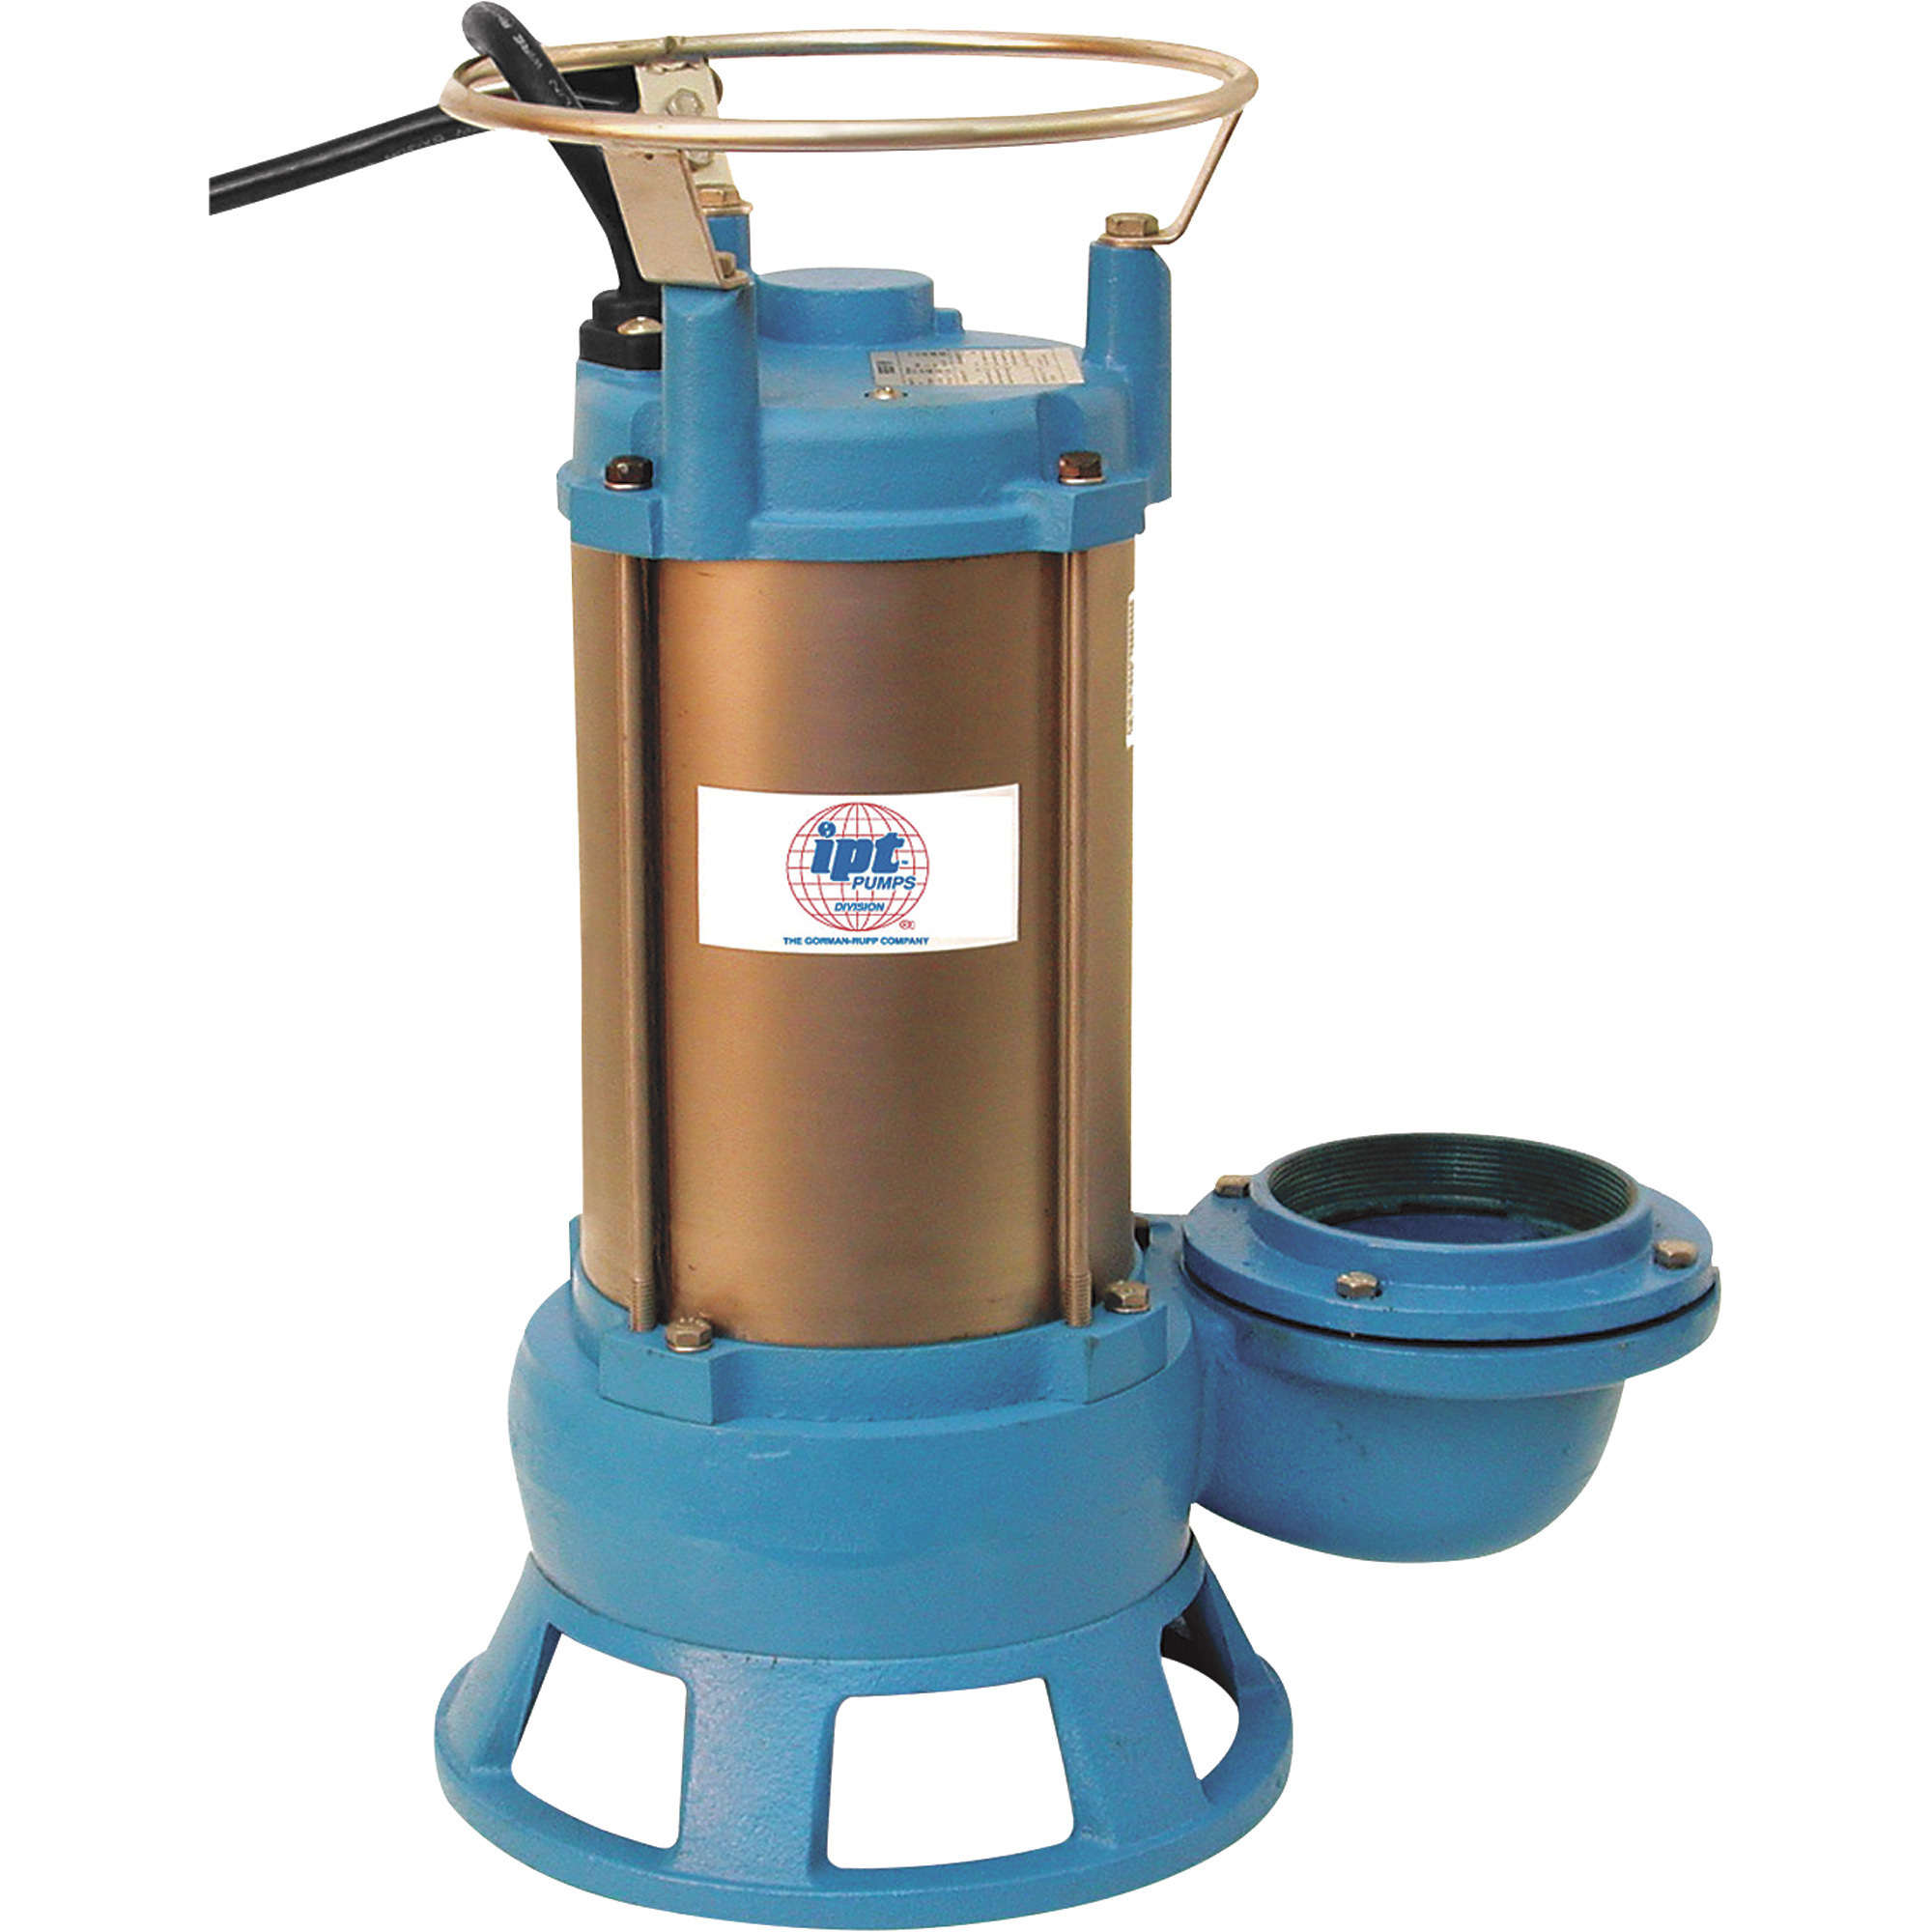 IPT Centrifugal Submersible Shredder Sewage Water Pump â 13,200 GPH, 3 HP, 4Inch Ports, Model 5765-IPT-95